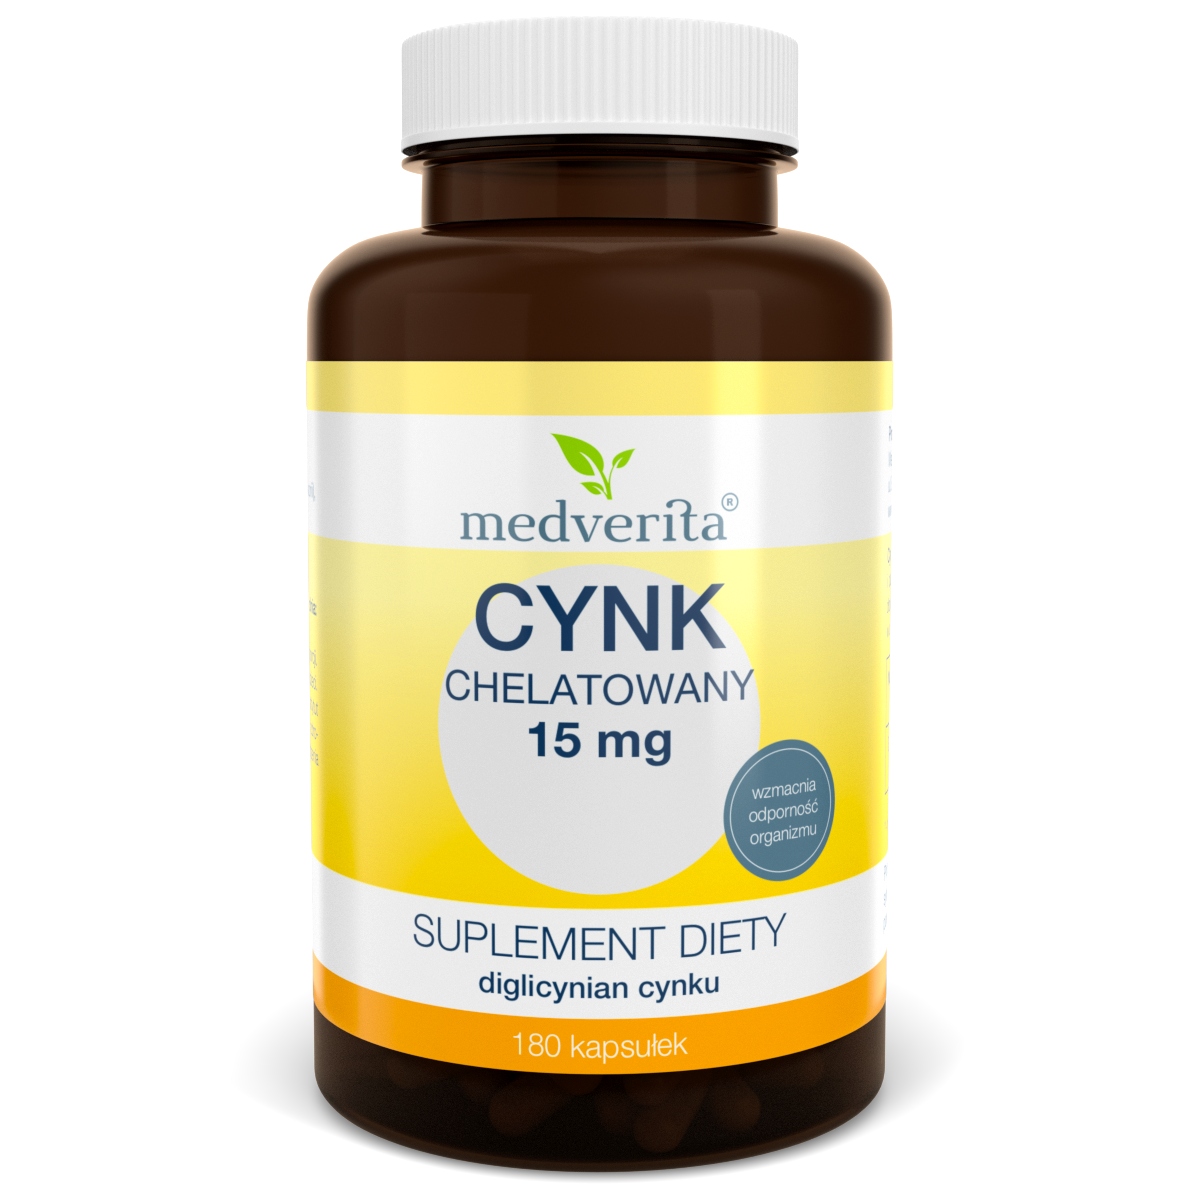 CYNK CHELATOWANY 15 mg Diglicynian - 180 kapsułek